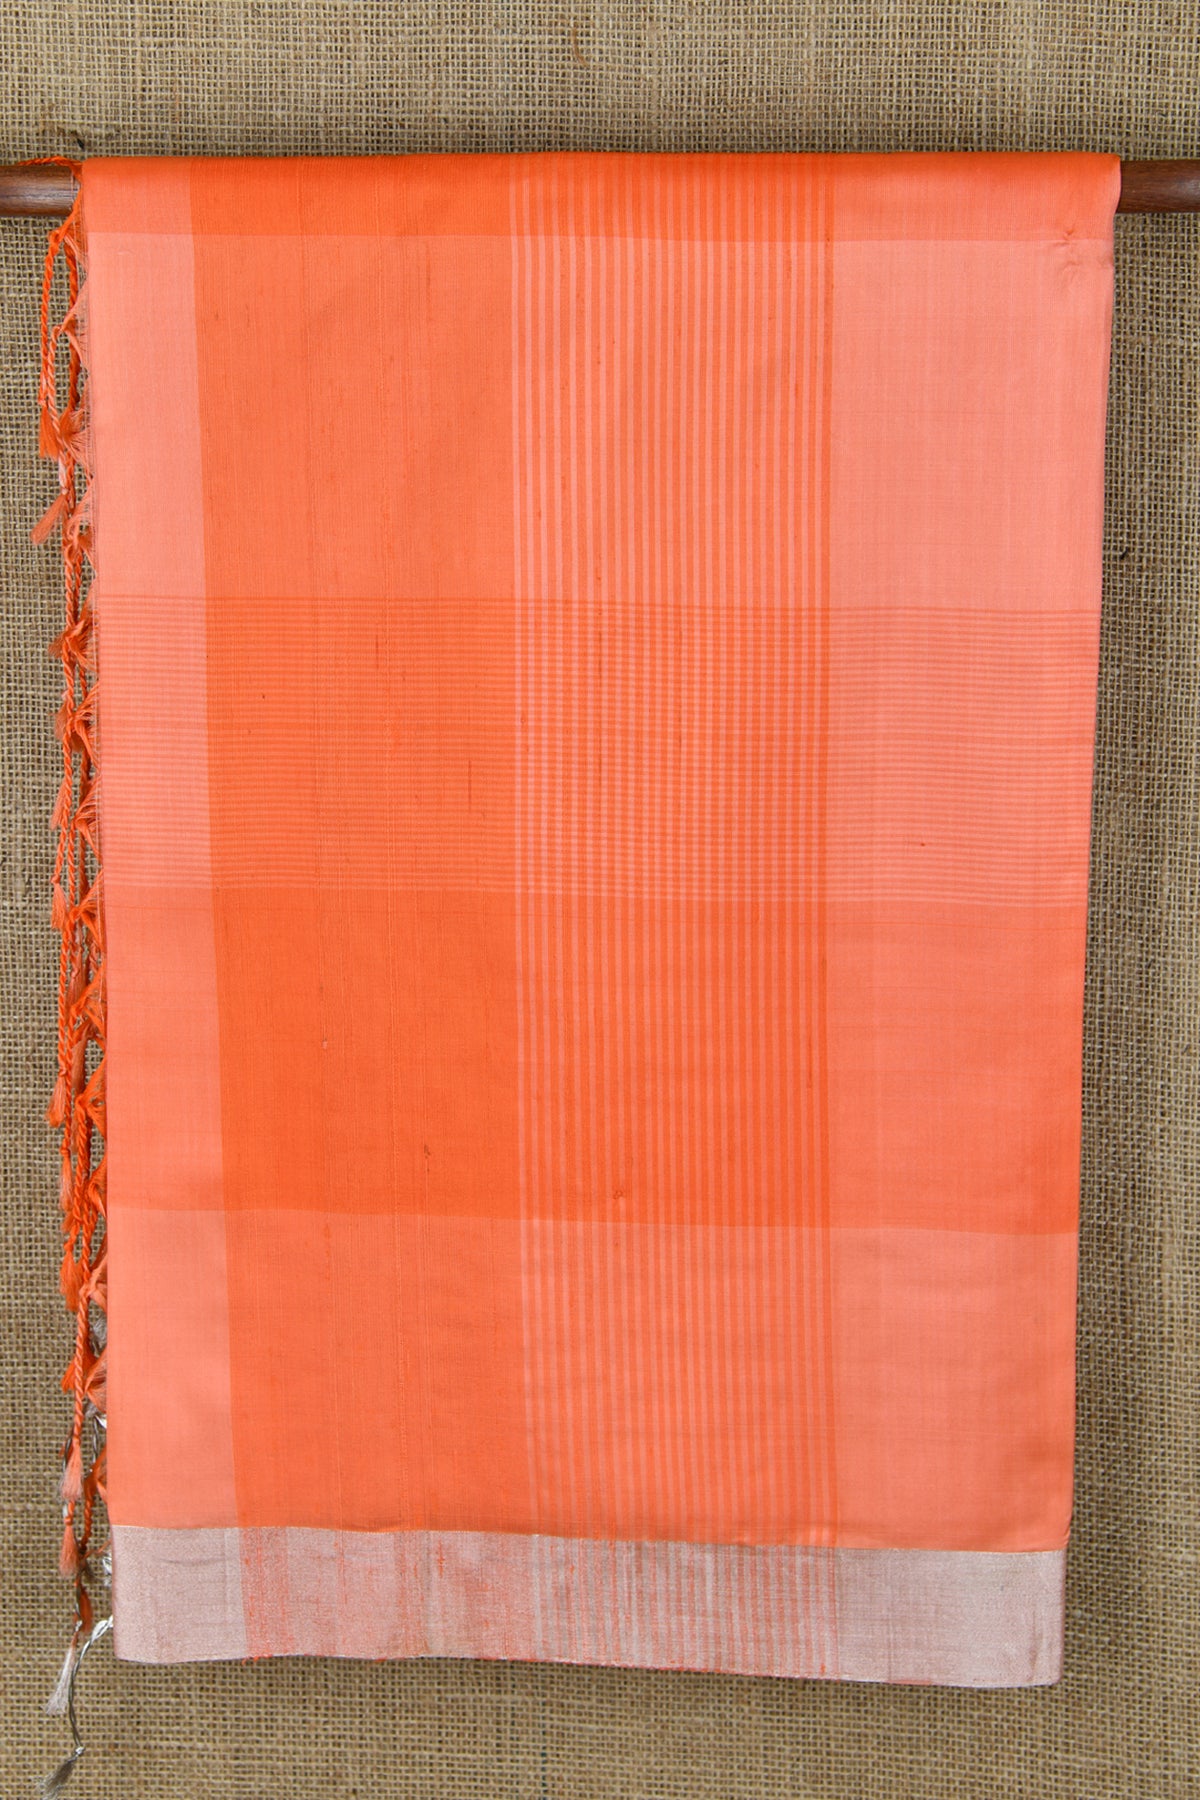 Checked Design Orange Soft Silk Saree